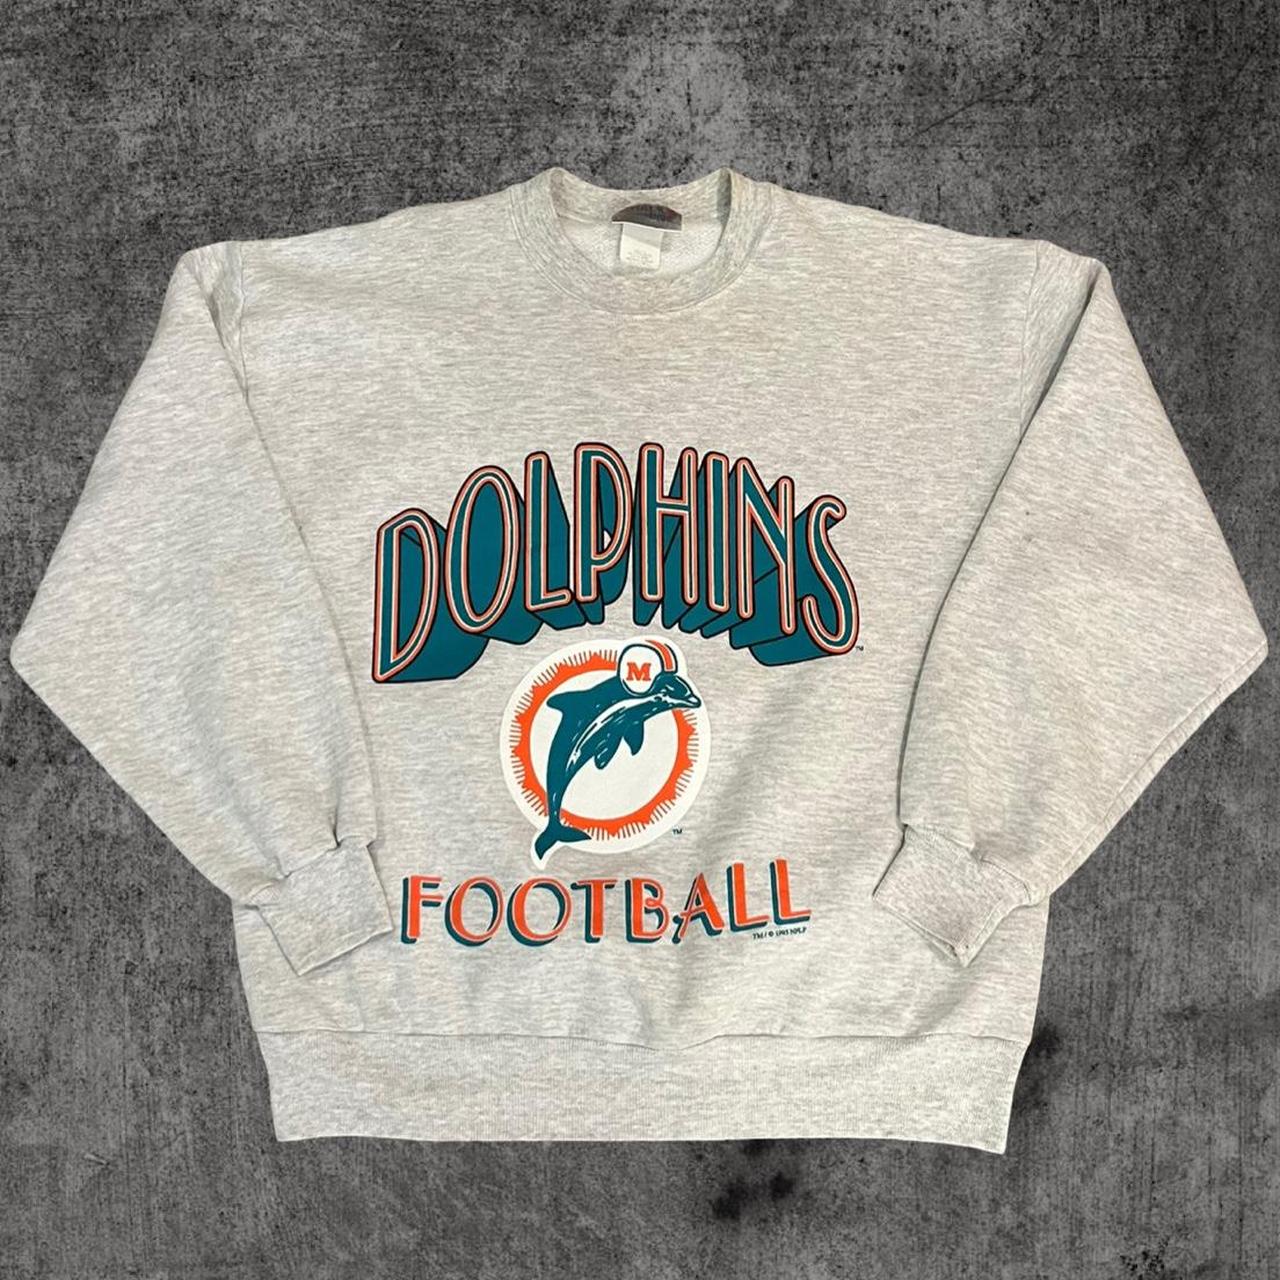 miami dolphins sweatshirt vintage